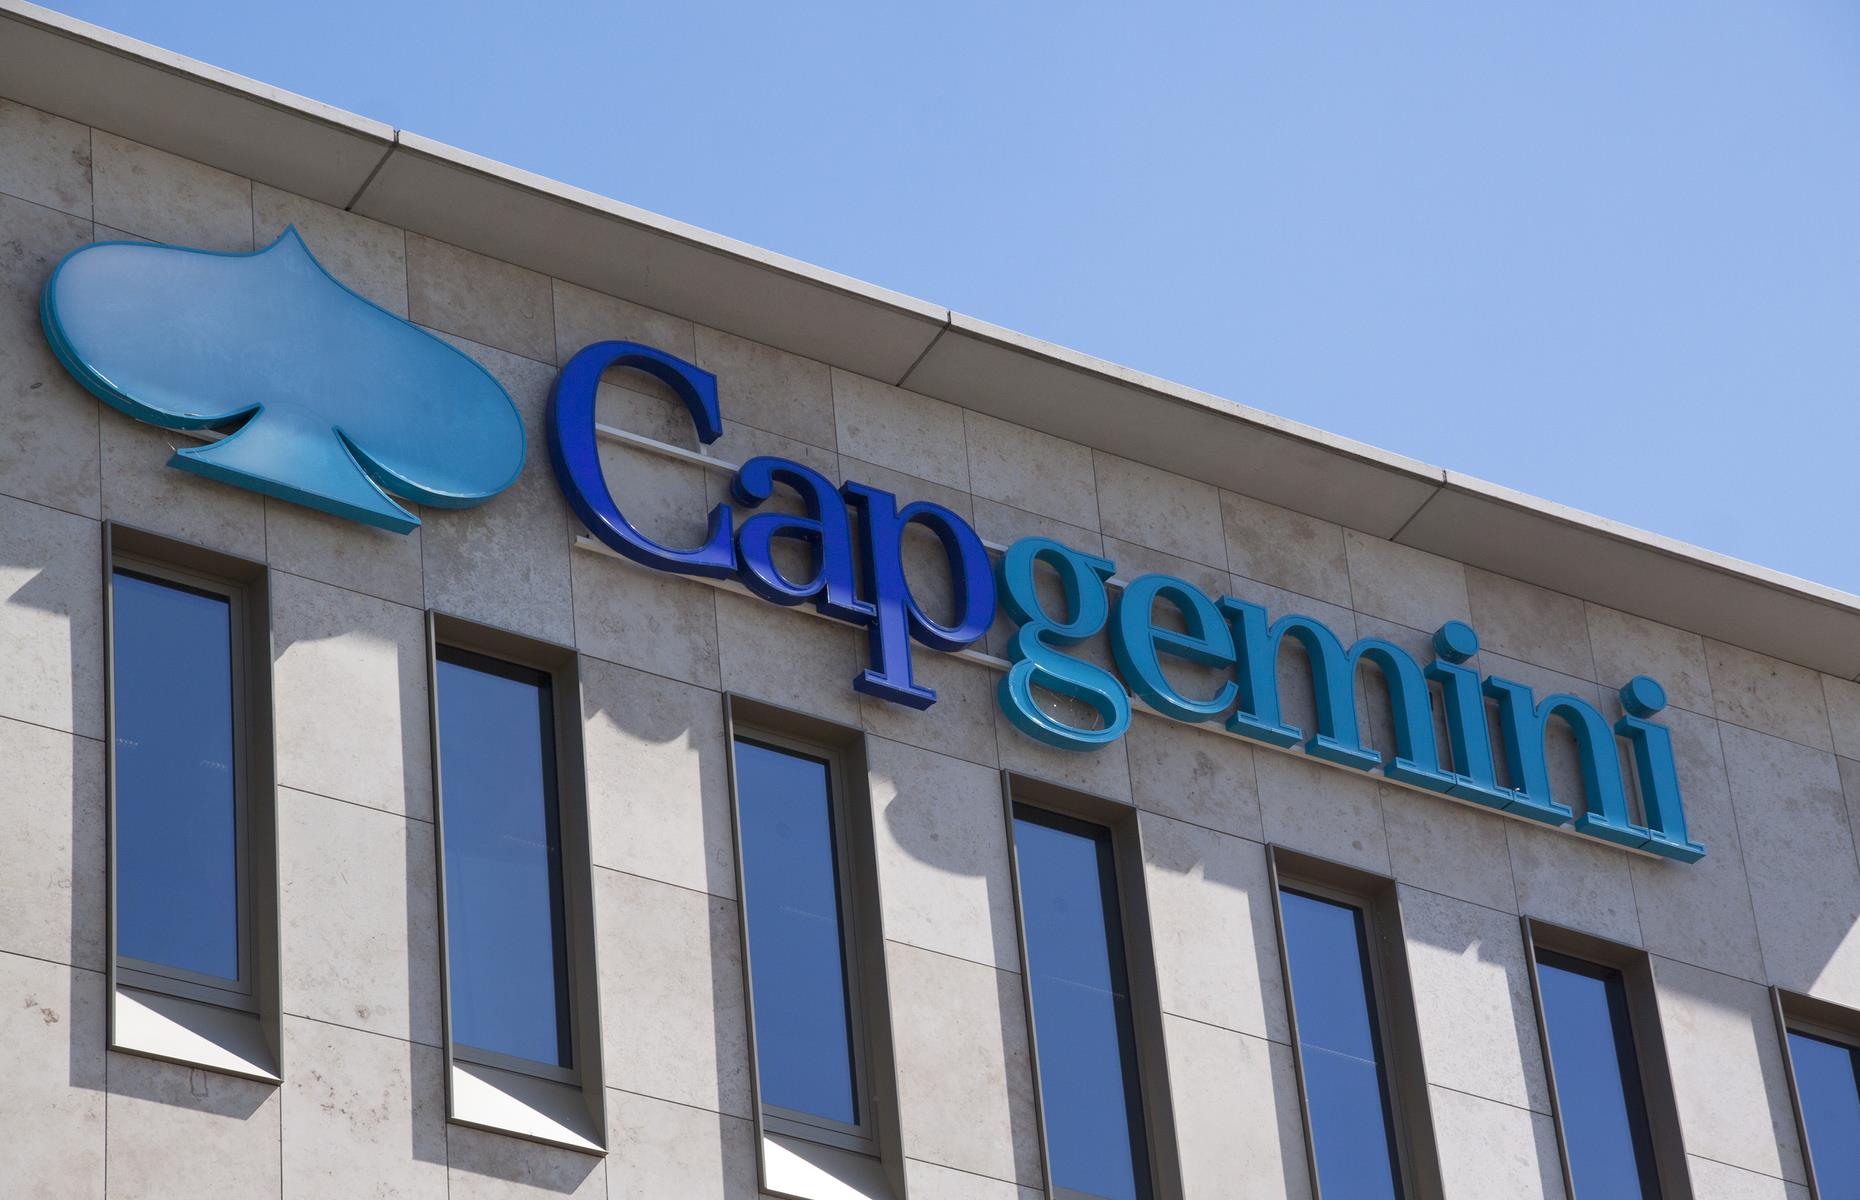 17. iGATE Corporation, now part of Capgemini